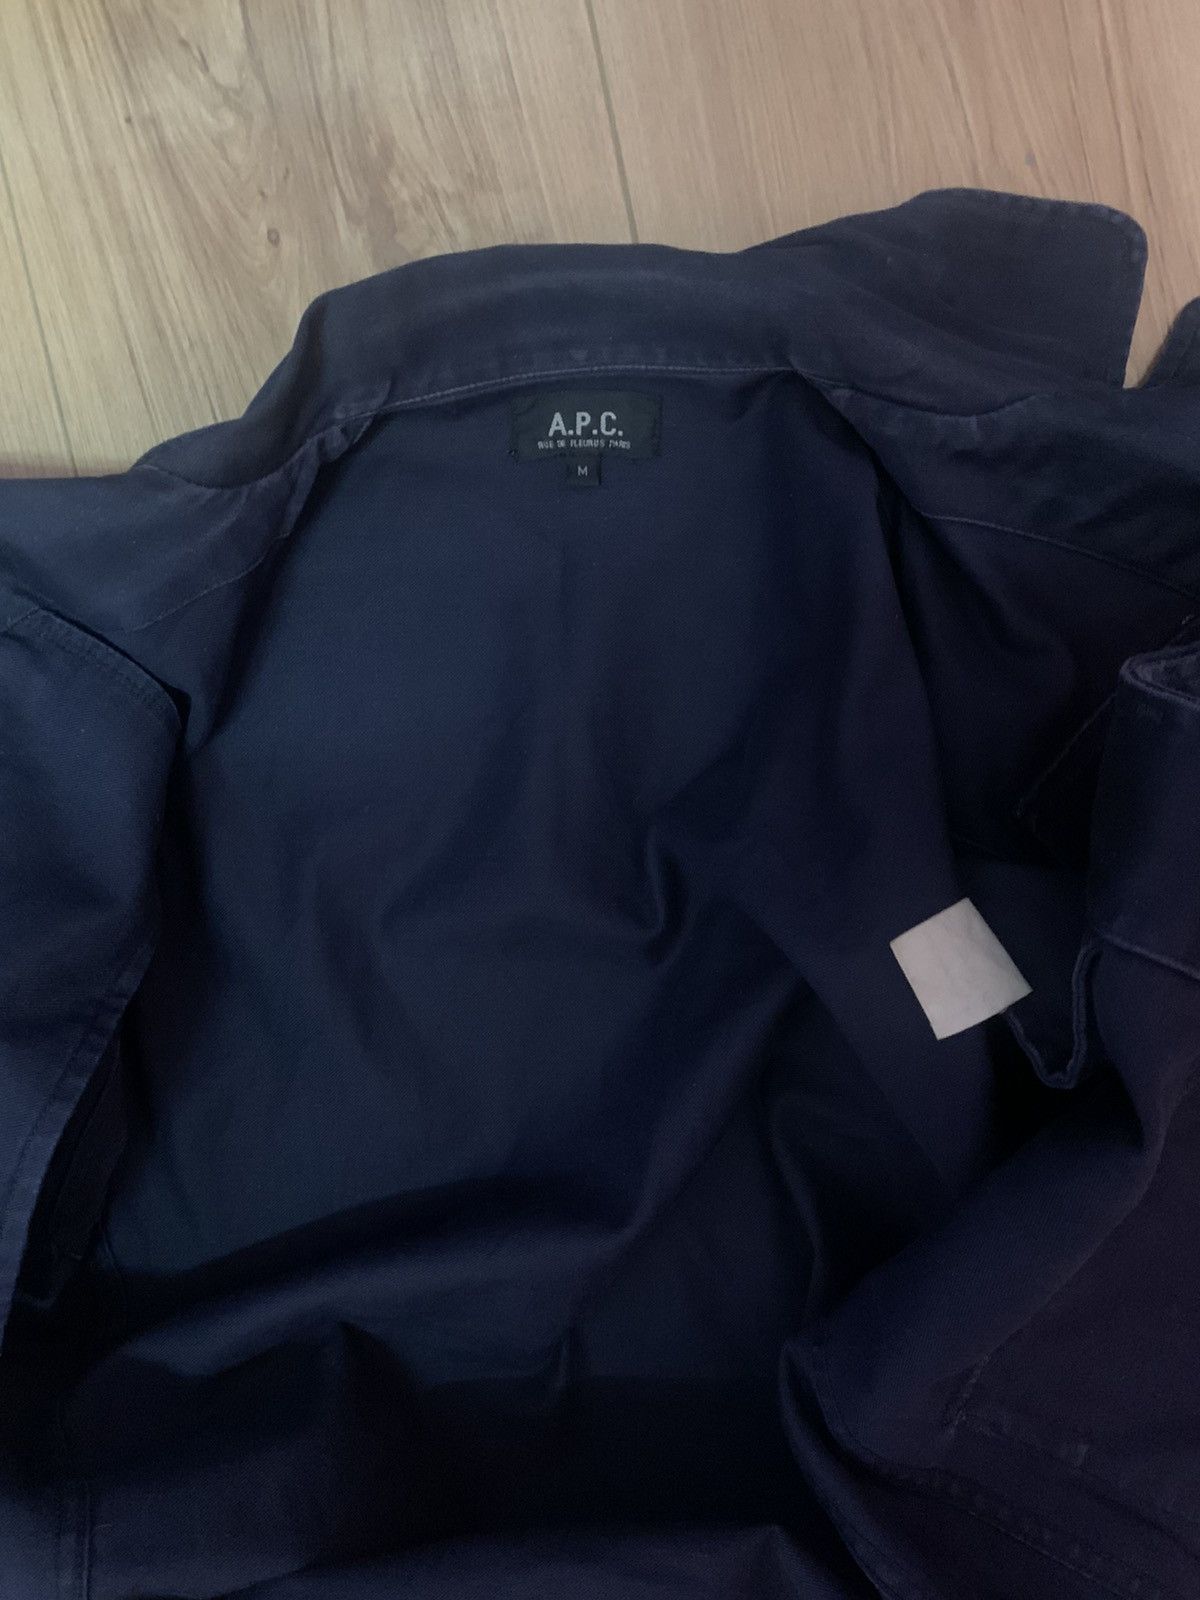 Rare Japanese Brand A.P.C Jacket Nice Design - 5